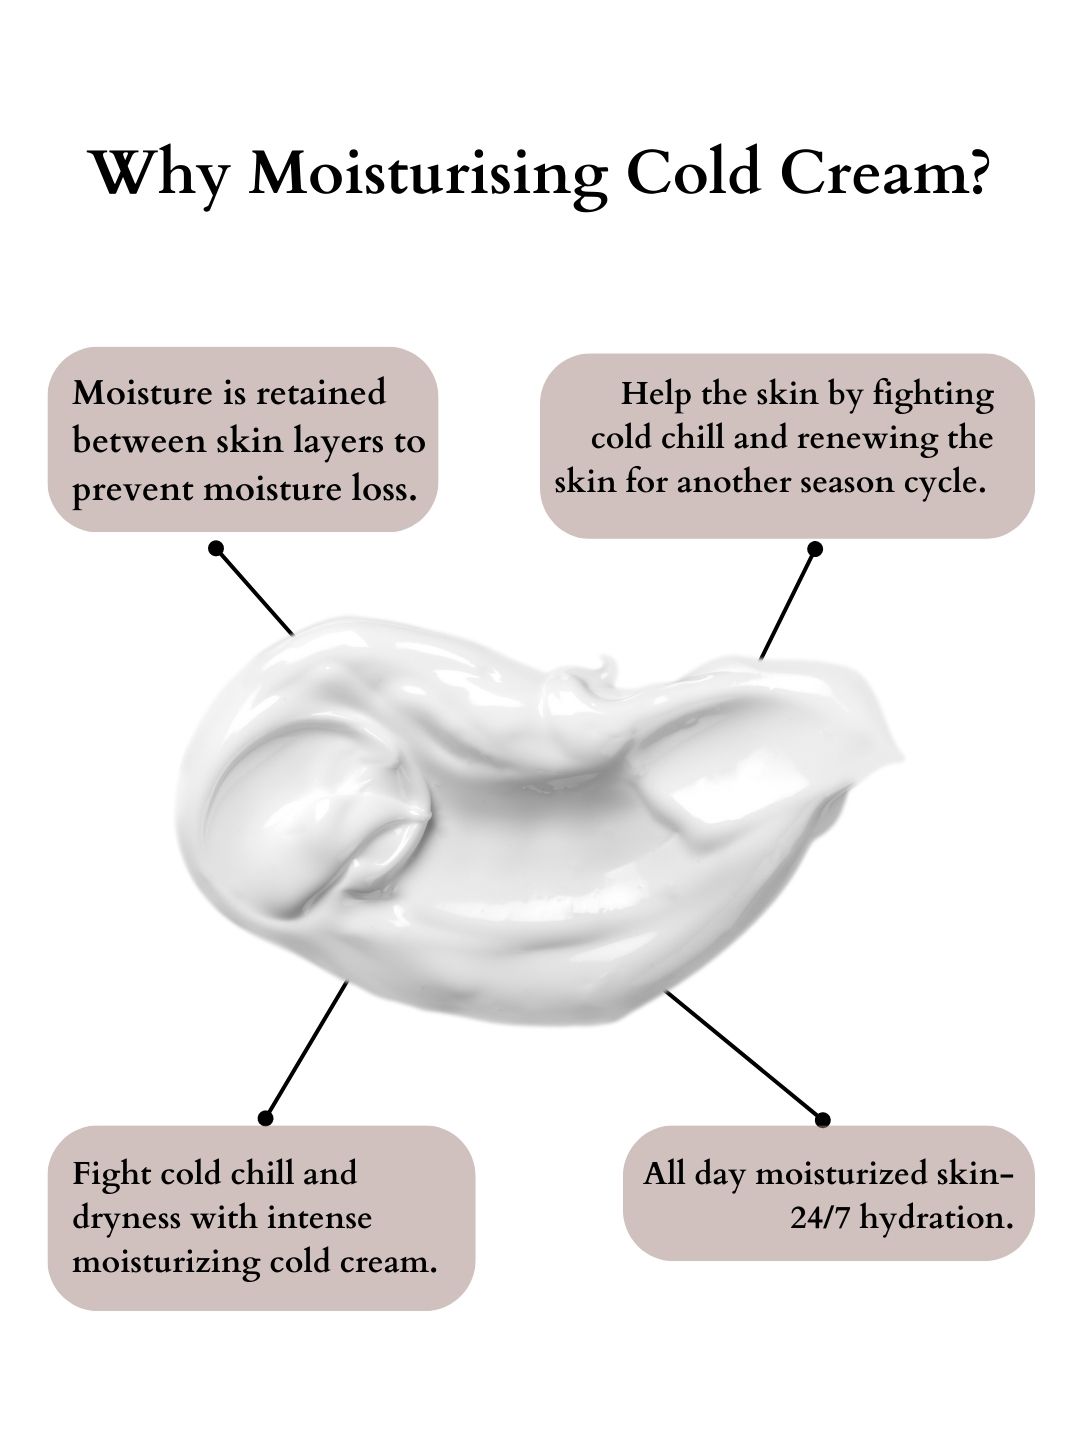 Cold Cream Benefits, Popularity